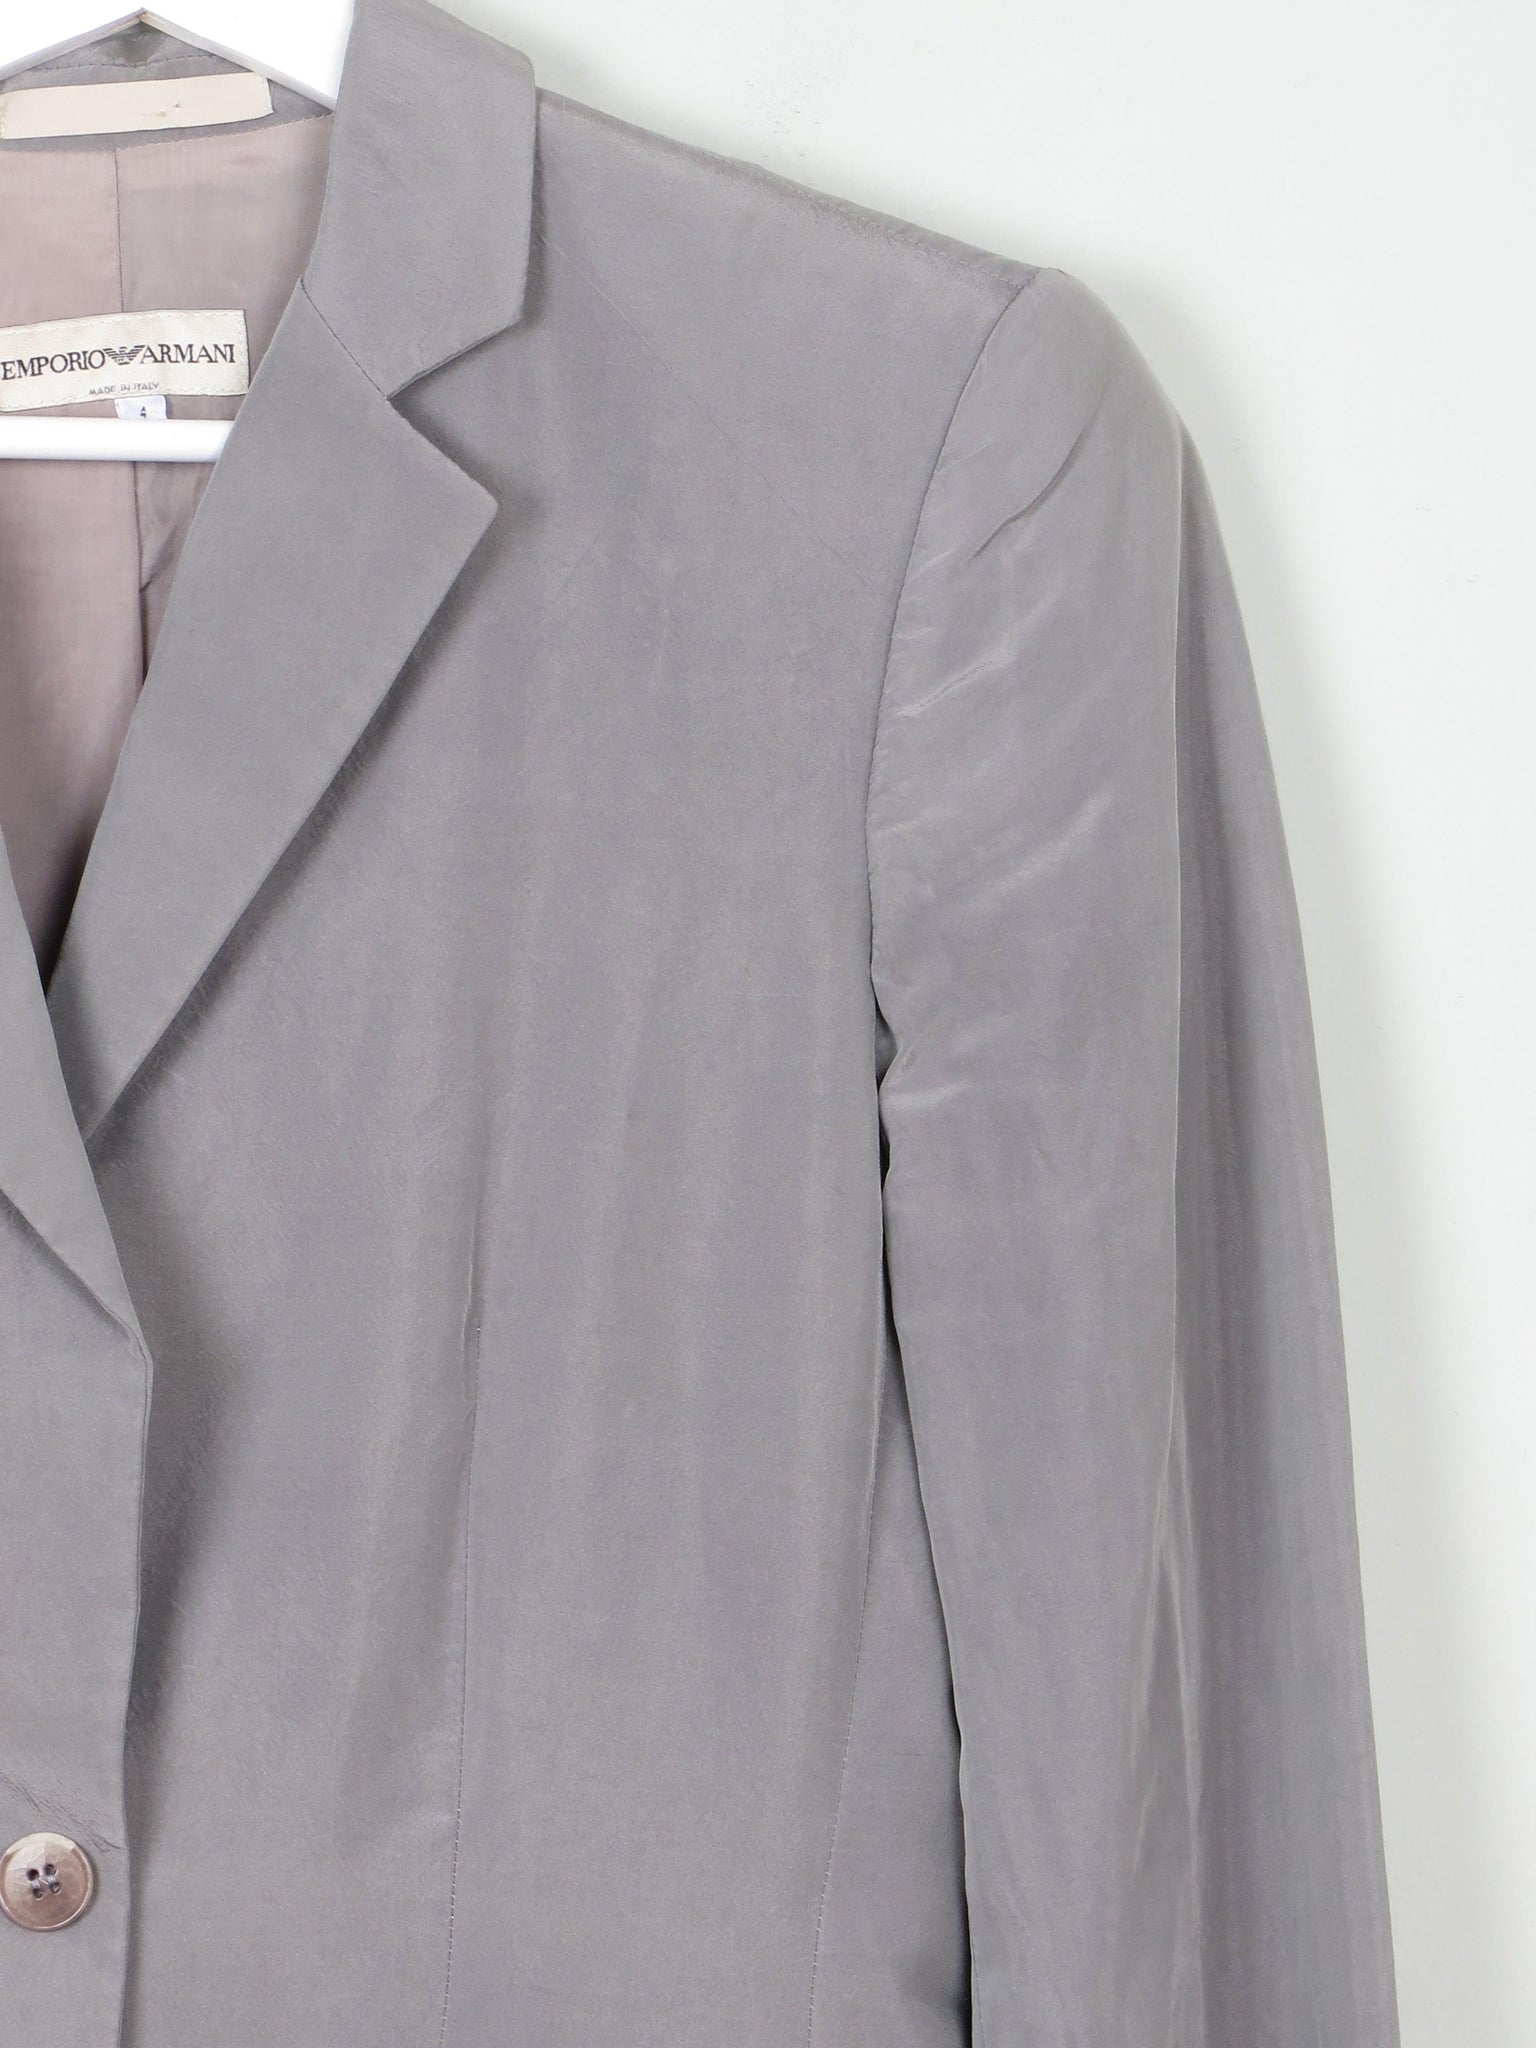 Vintage Women's Grey Armani Satin Jacket 6/8 XS - The Harlequin